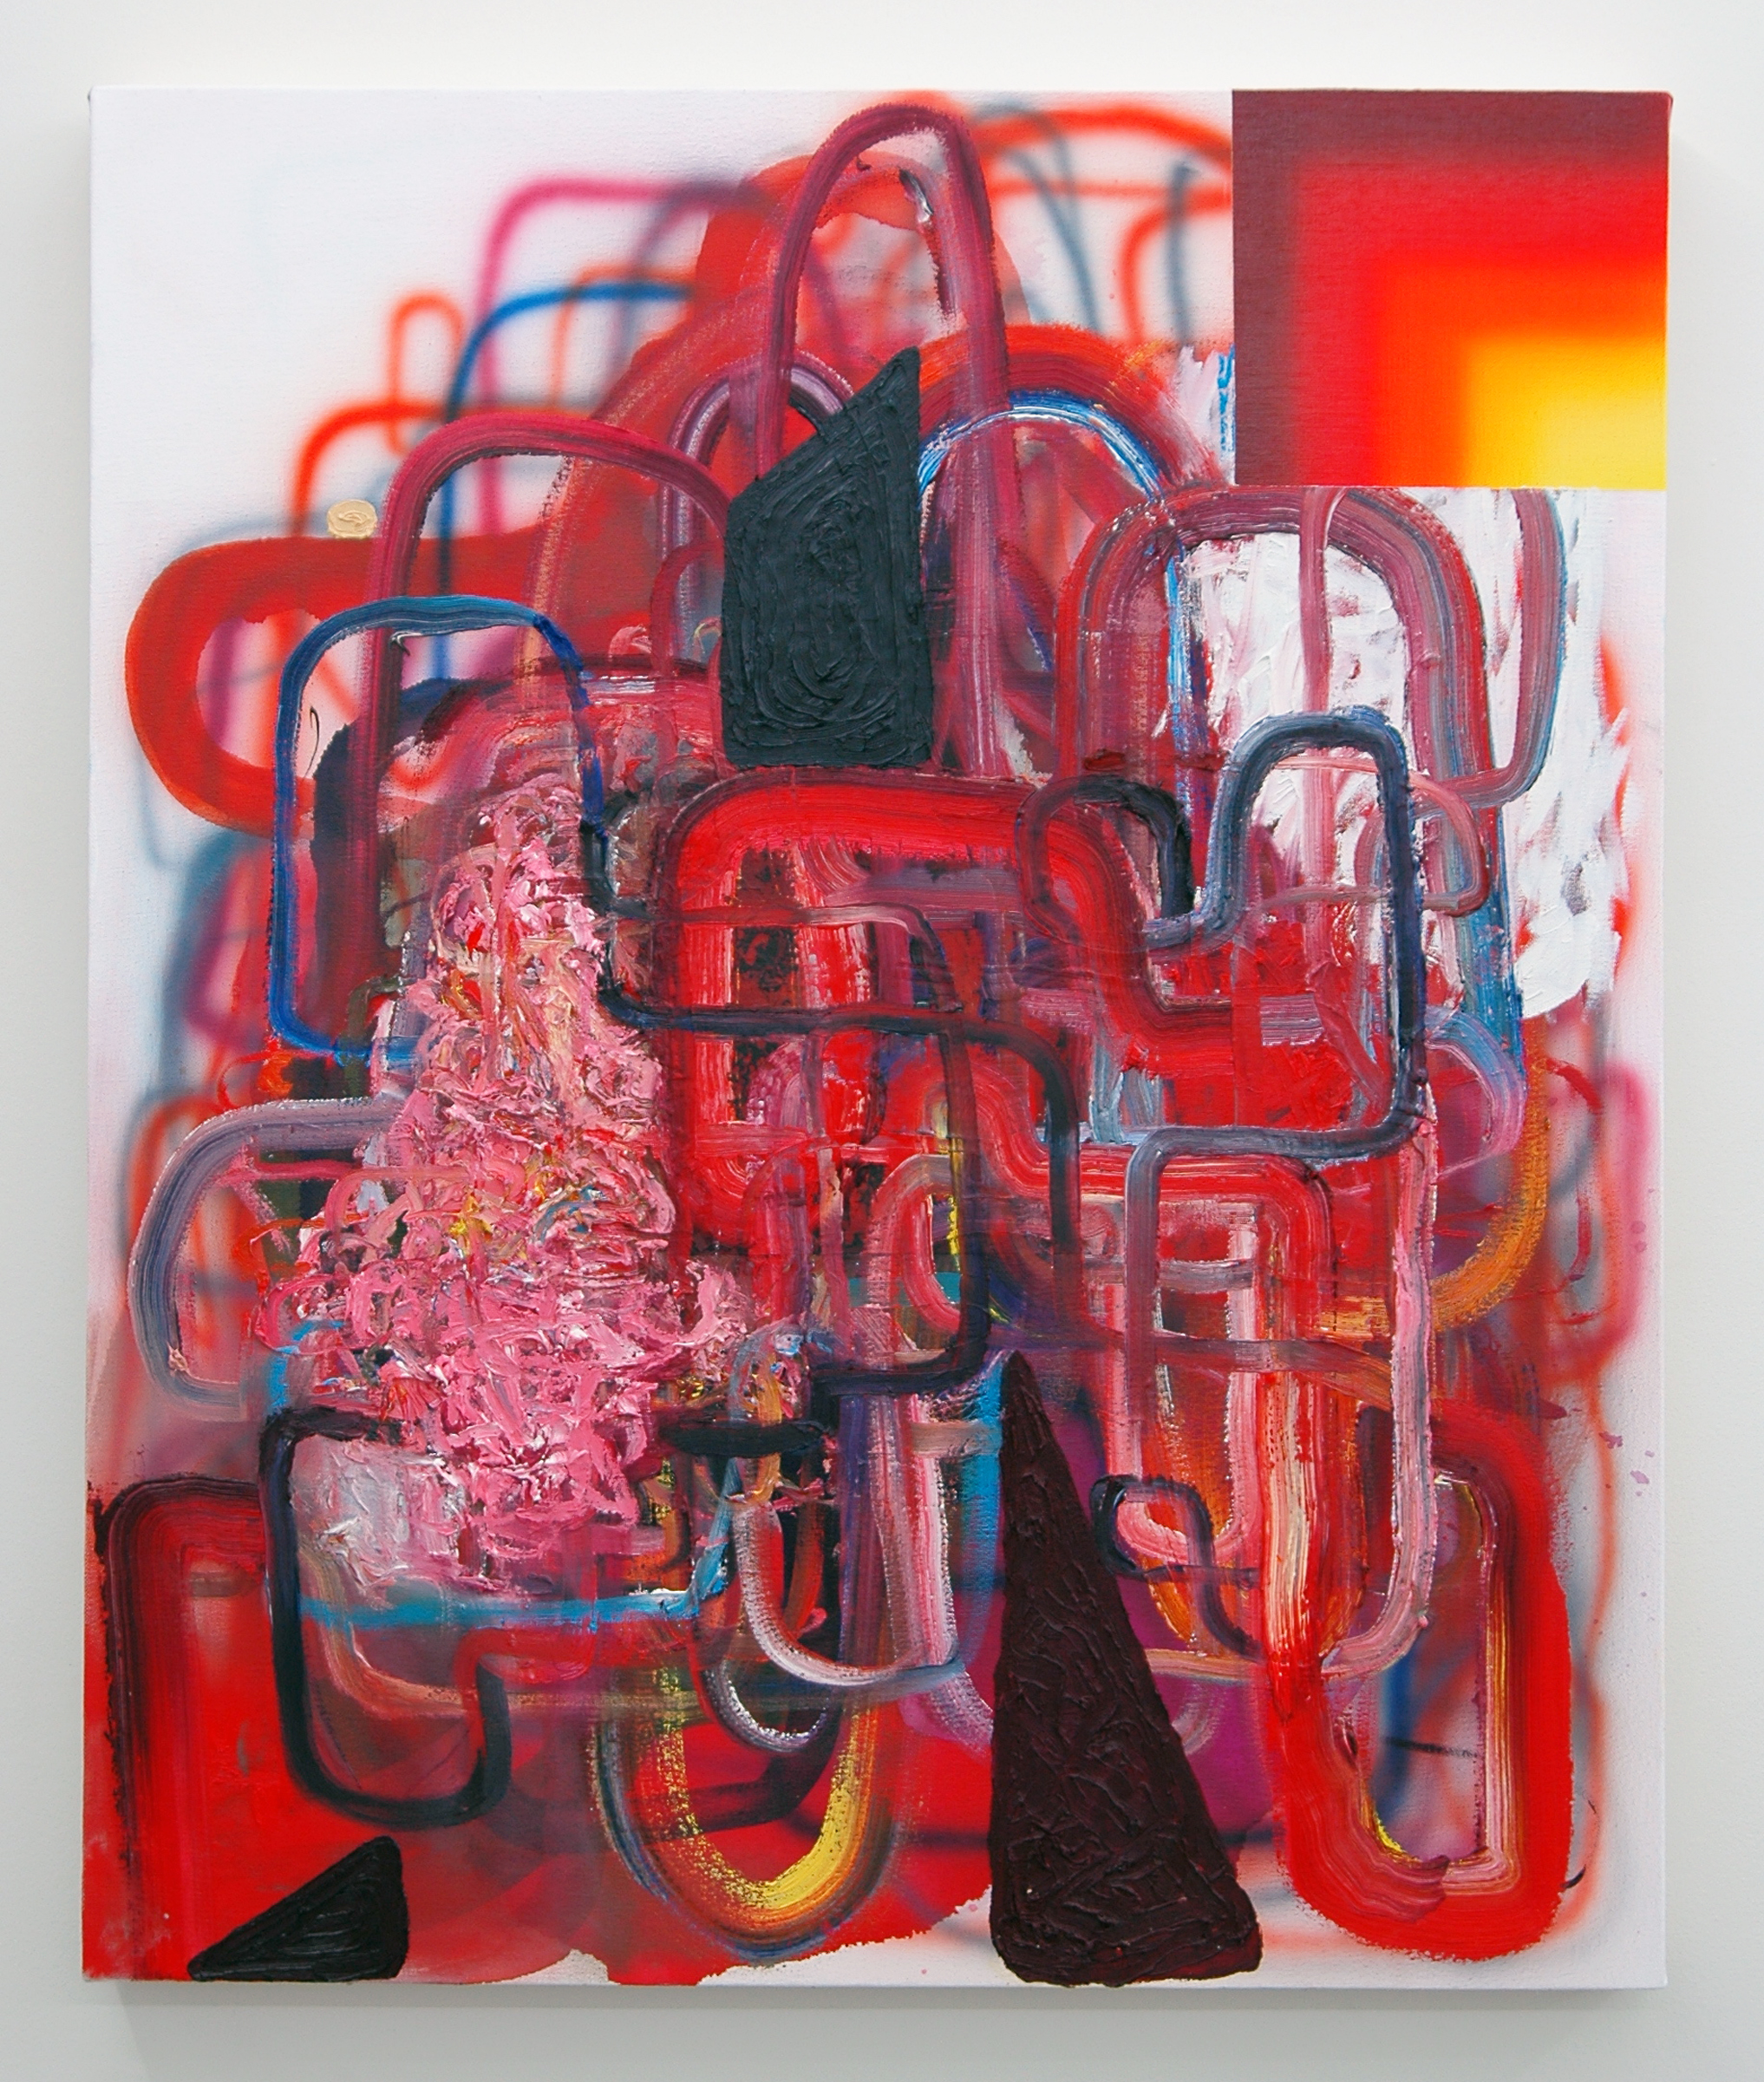   /SLASH/  Josh Podoll, &nbsp;Broken Foot , oil and acrylic on canvas, 36" x 30", 2014   